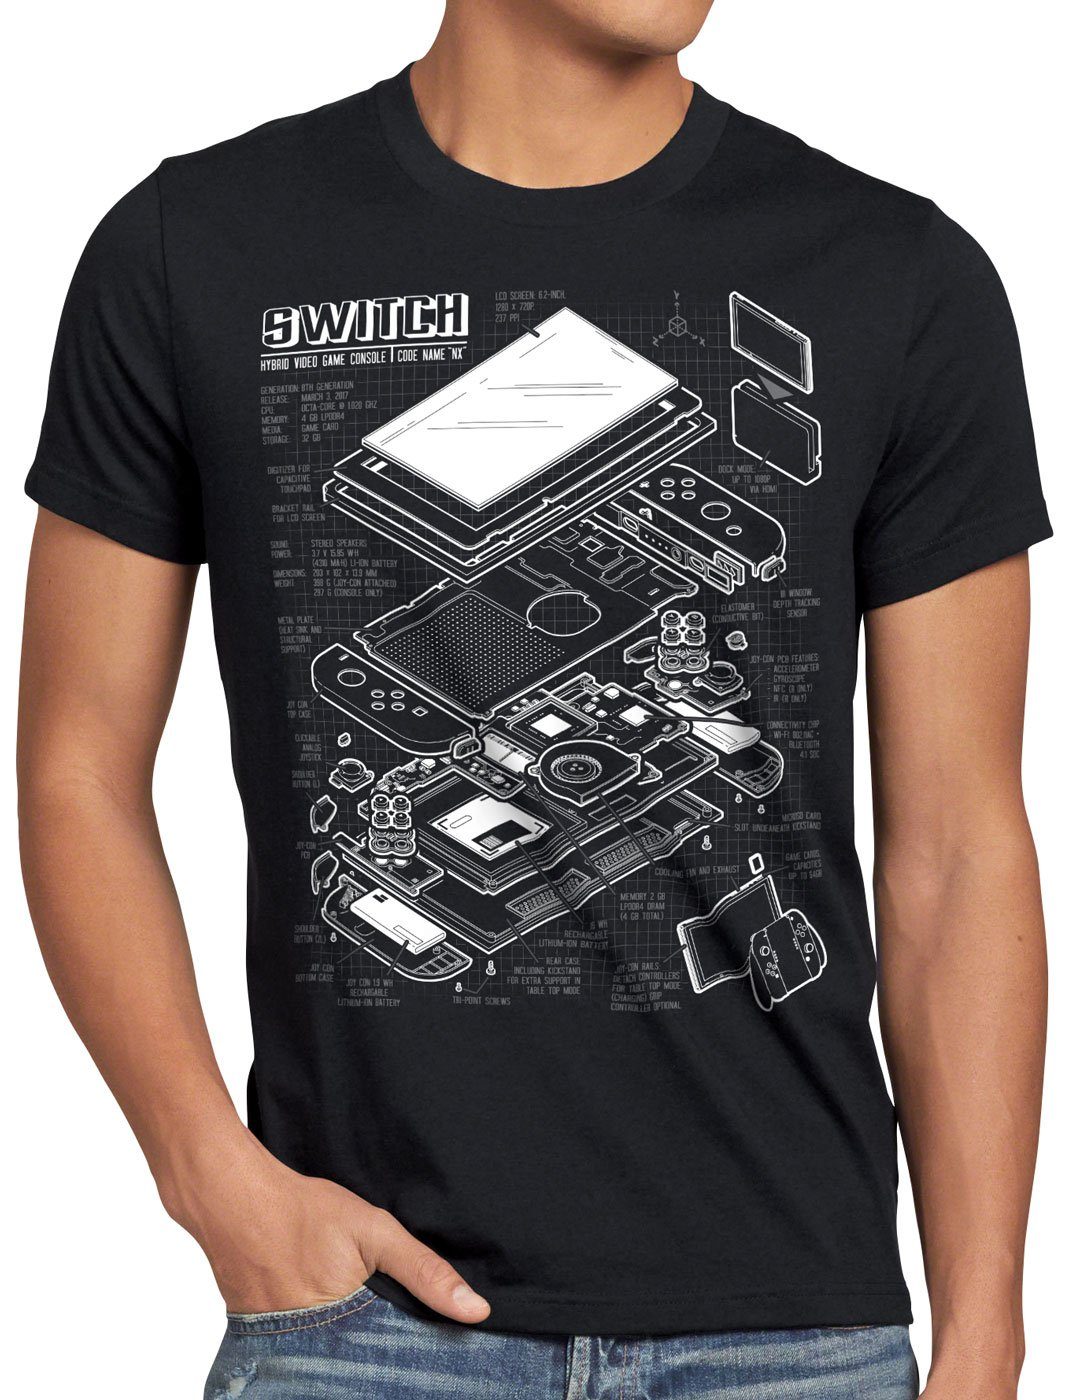 style3 Print-Shirt Herren T-Shirt Switch Blaupause pro gamer konsole joy-con schwarz